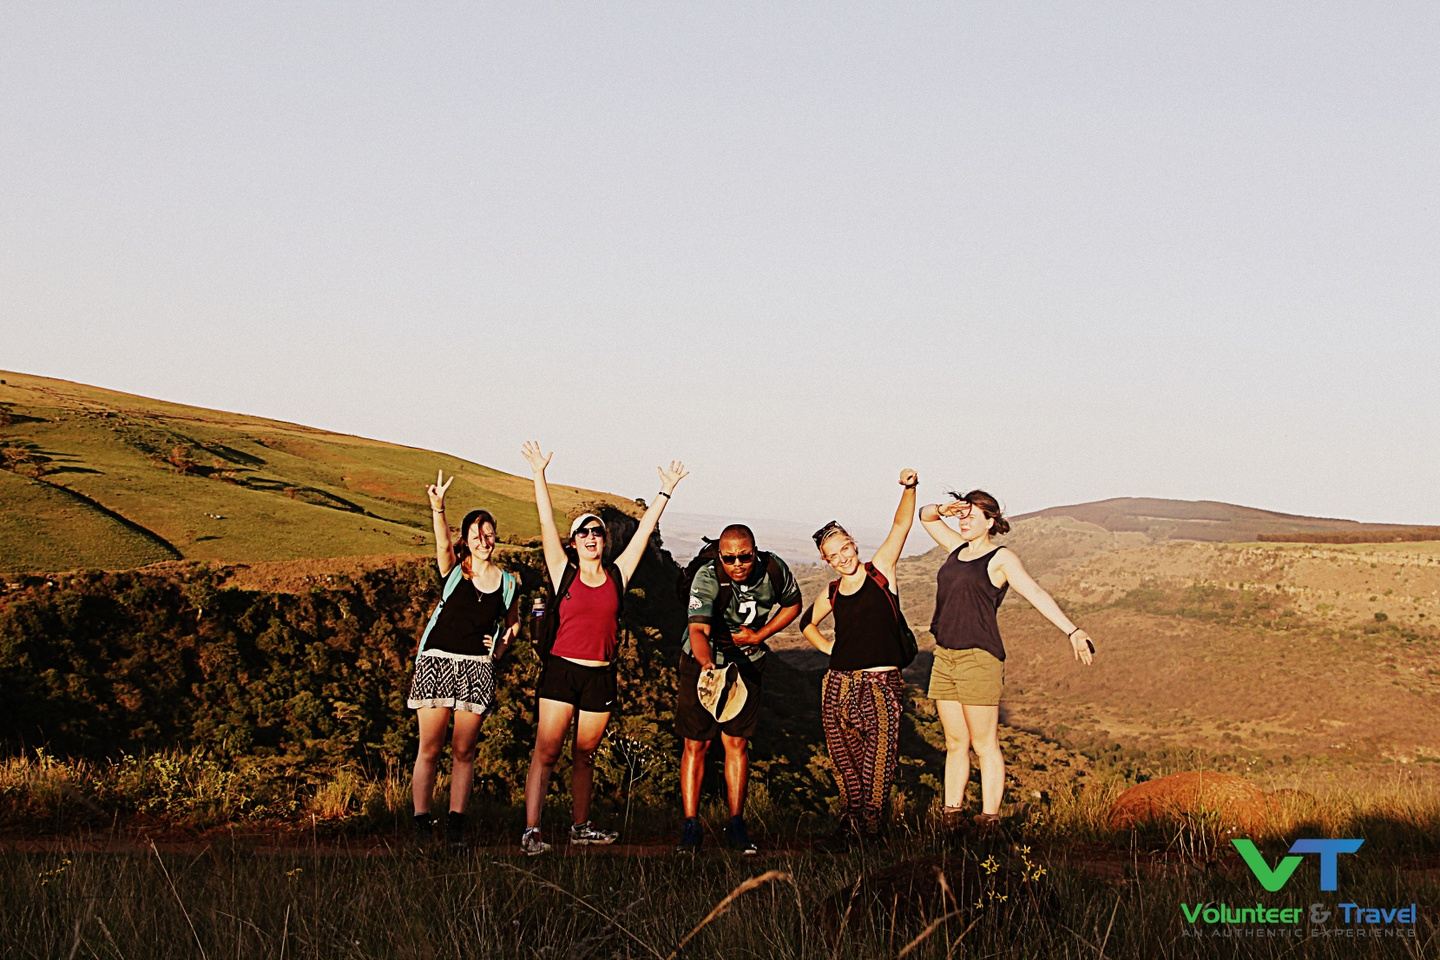 Volunteer & Travel South Africa